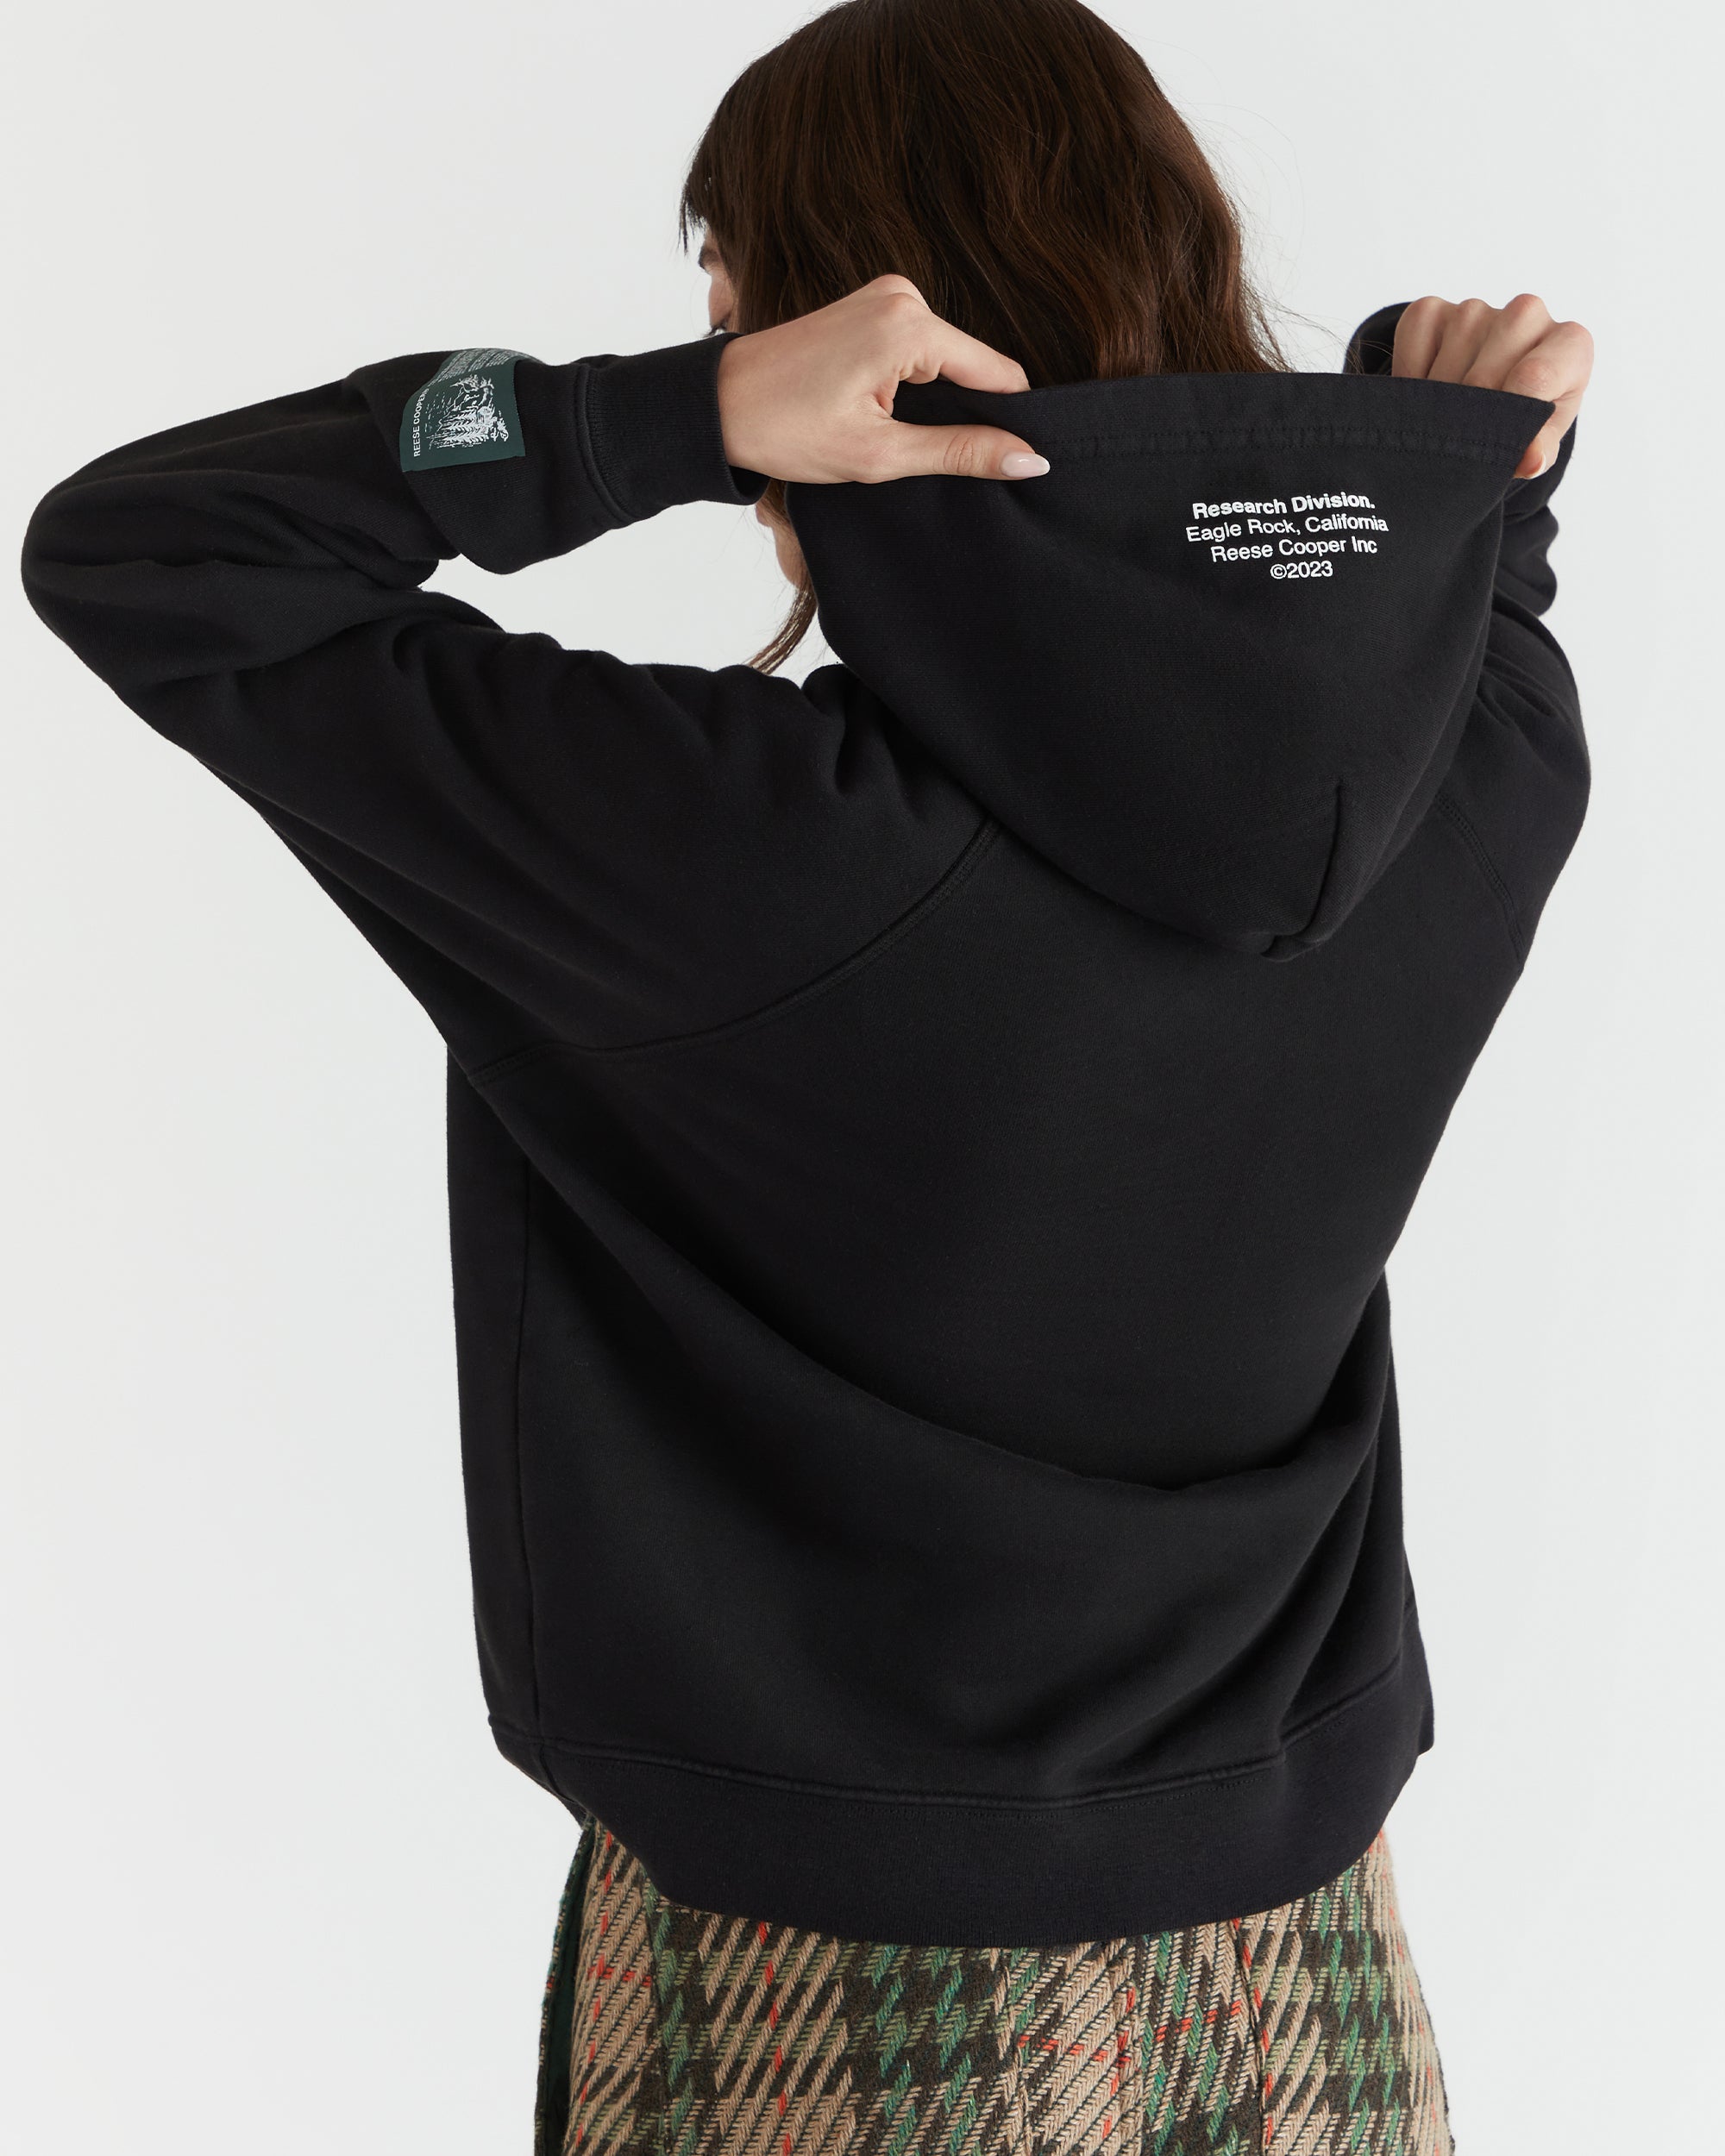 Women - Field Research Division Hooded Sweatshirt - Black - 3